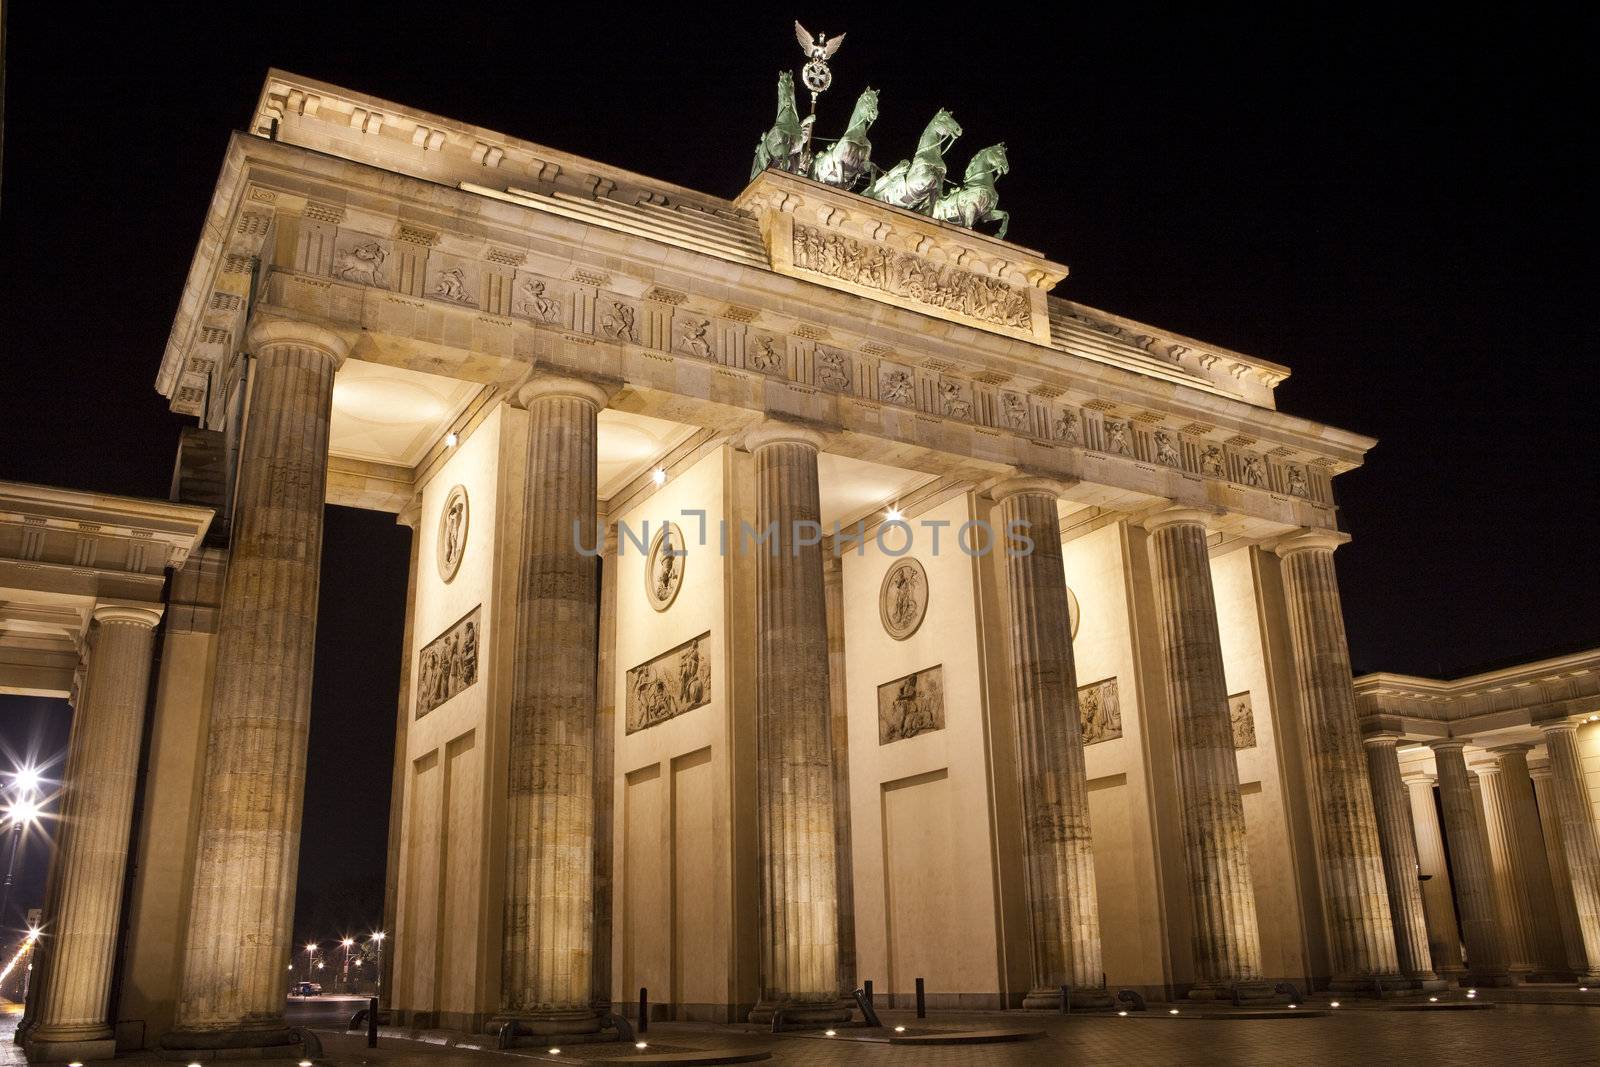 Brandenburg Gate in Berlin by chrisdorney